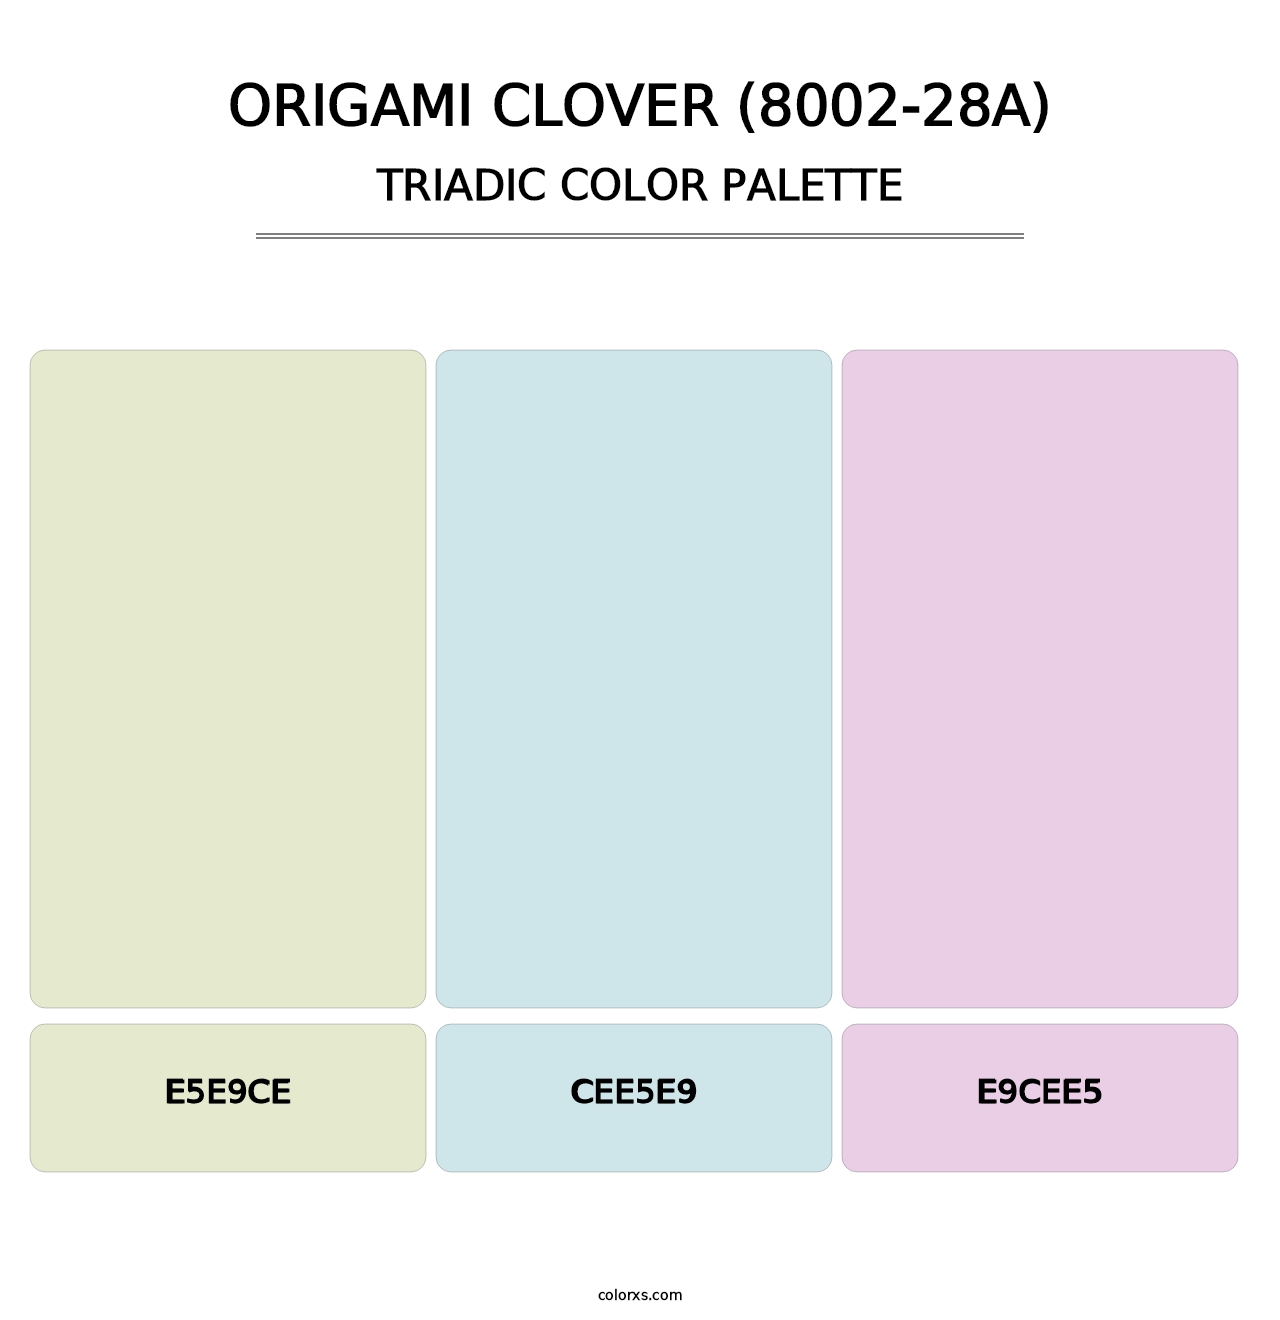 Origami Clover (8002-28A) - Triadic Color Palette